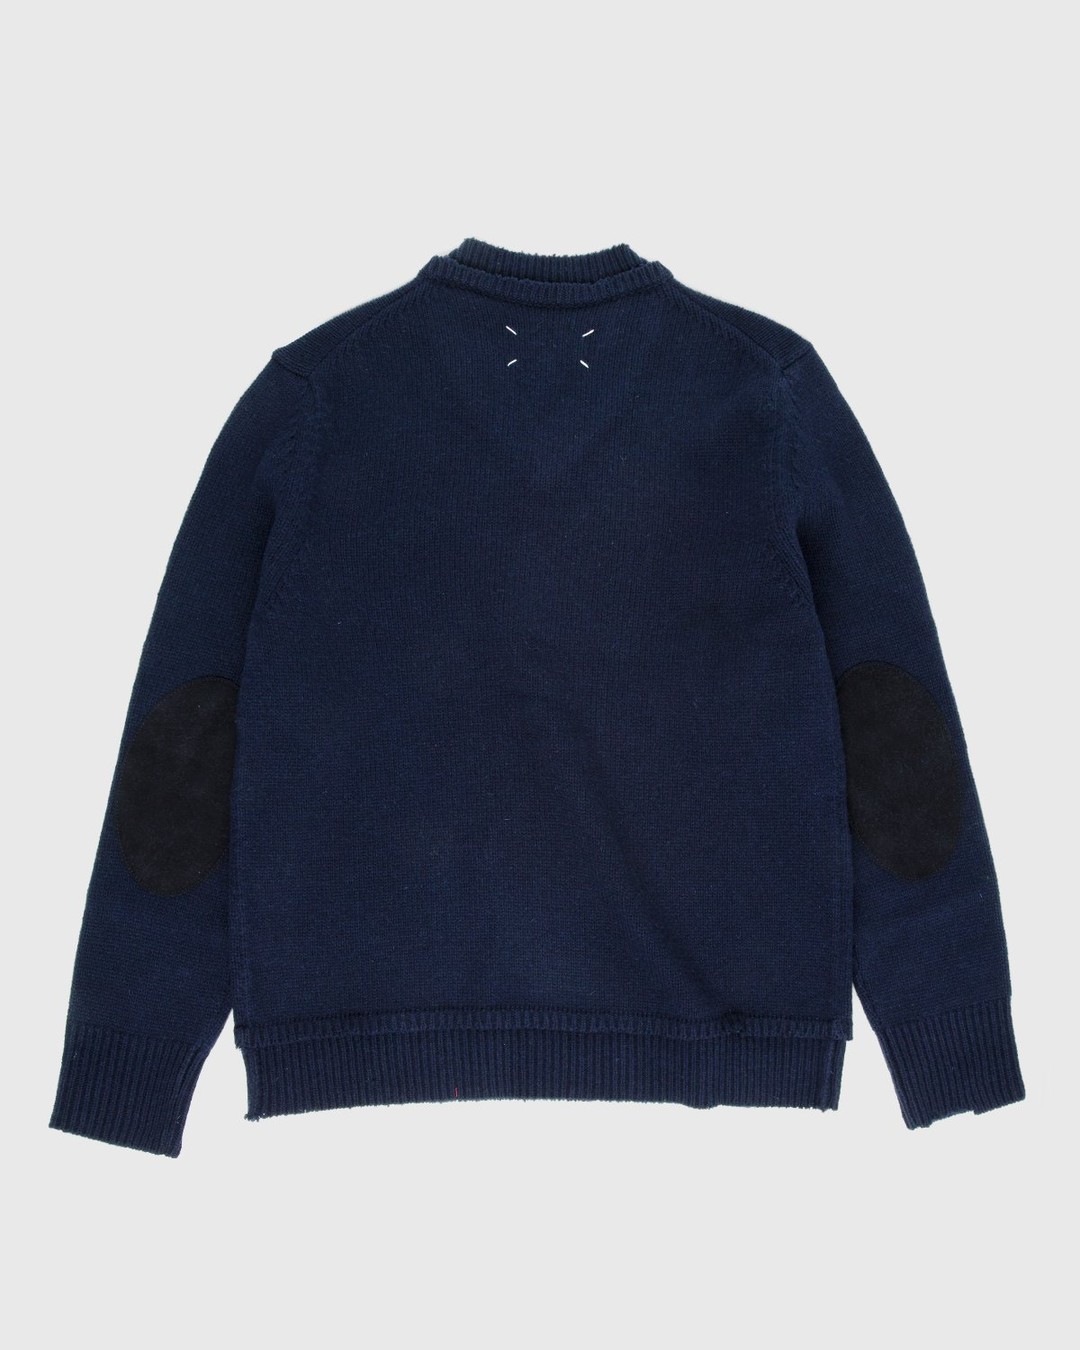 Maison Margiela – Sweater Navy - V-Necks Knitwear - Blue - Image 2